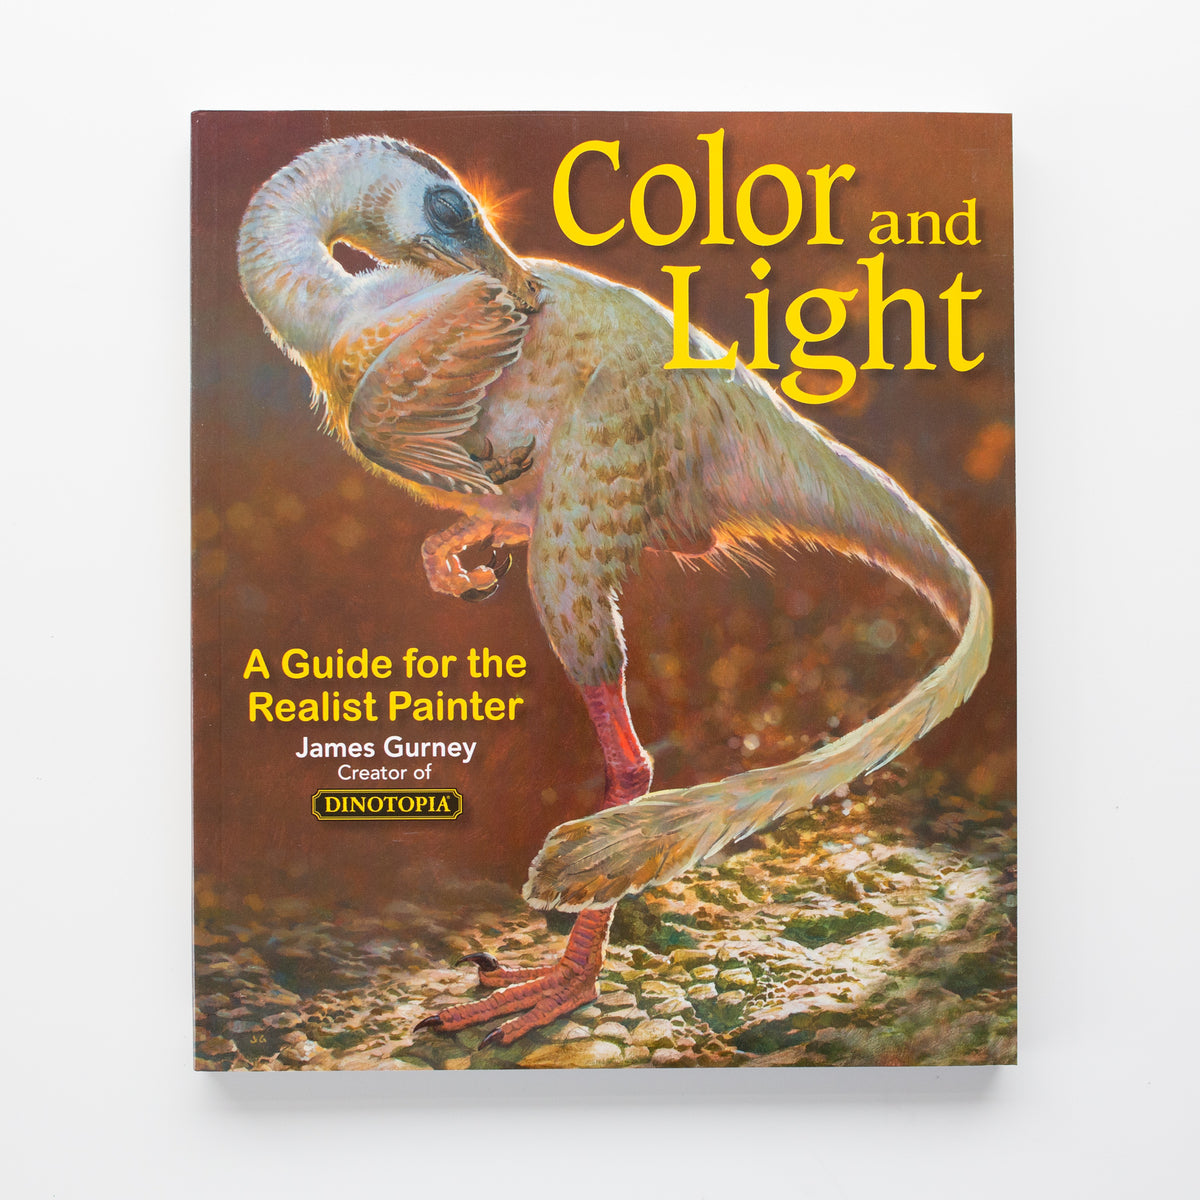 Color & Light' by James Gurney